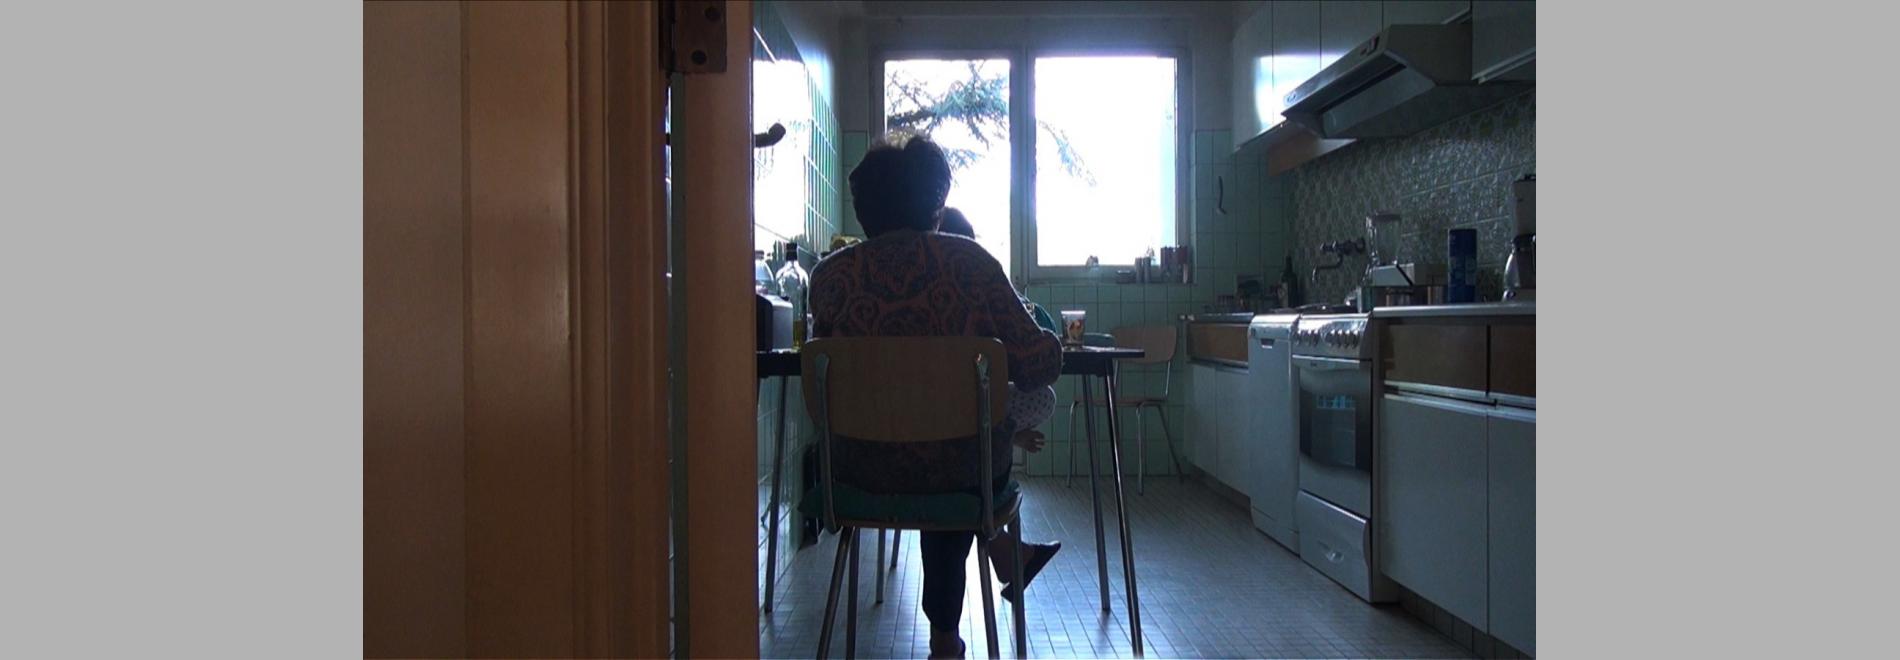 No Home Movie (Chantal Akerman, 2015)